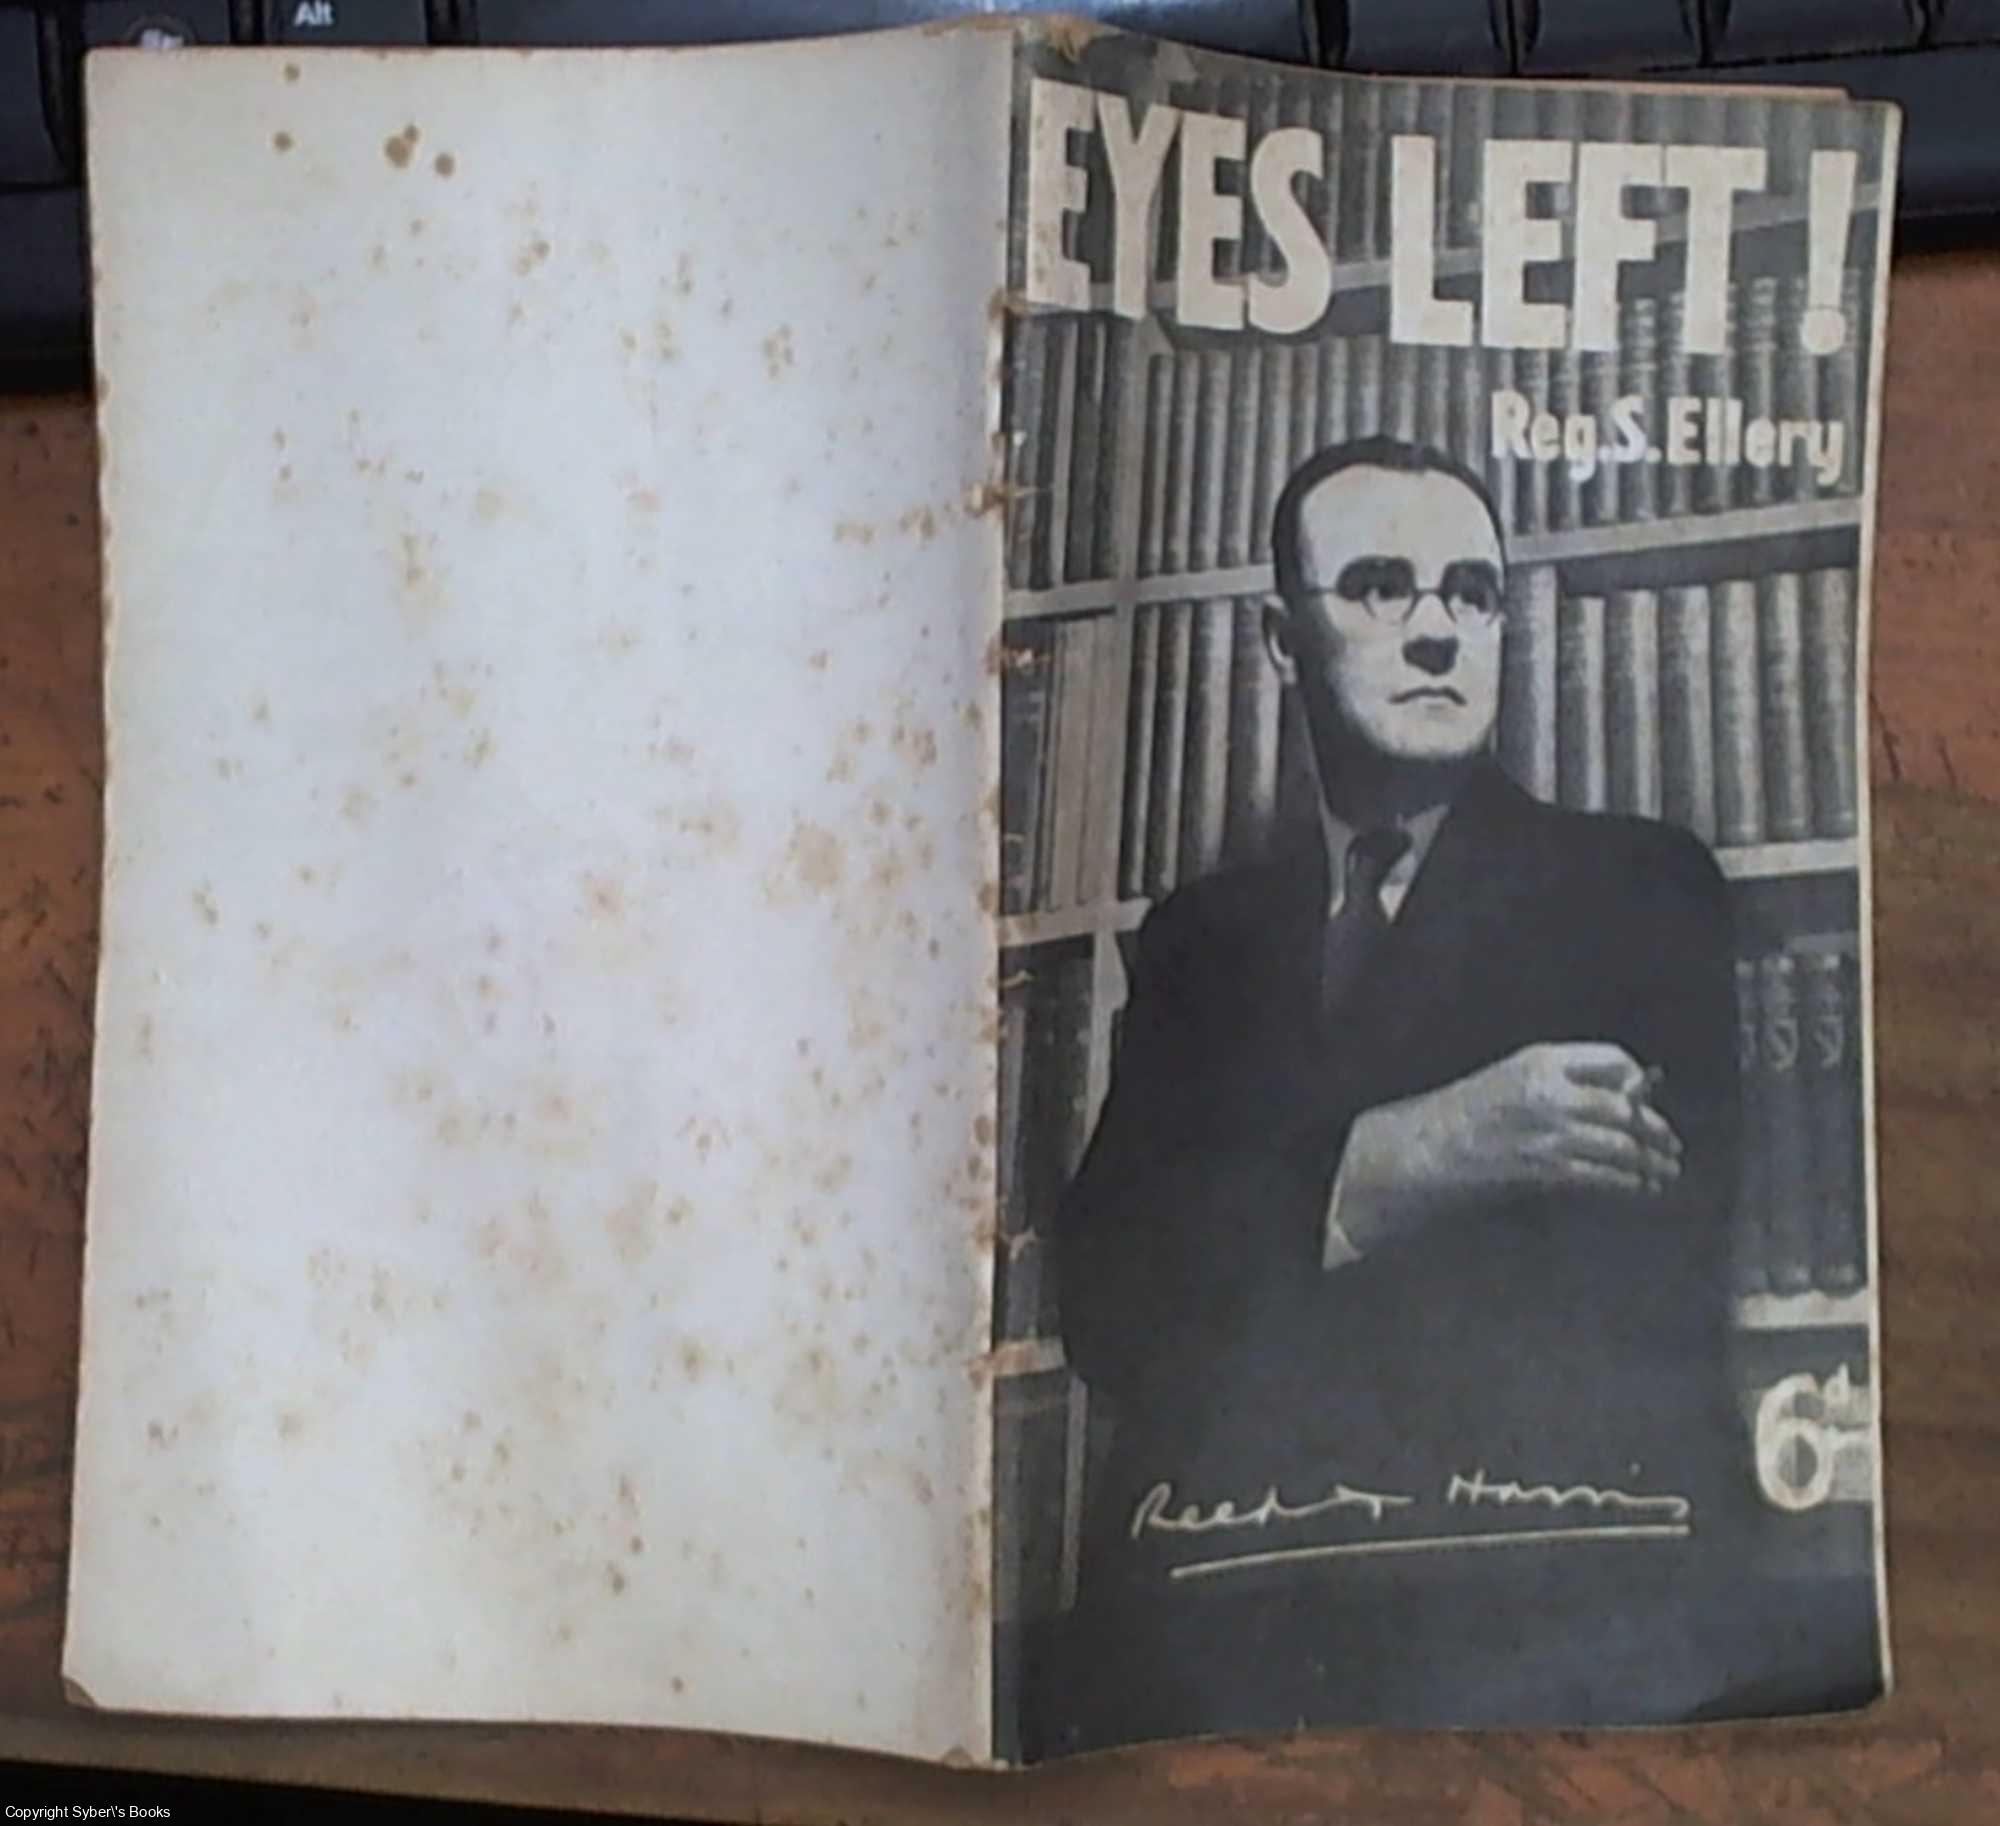 Ellery, Reg S. (Reginald Spencer), 1897-1955 - Eyes left! : the Soviet Union and the post-war world